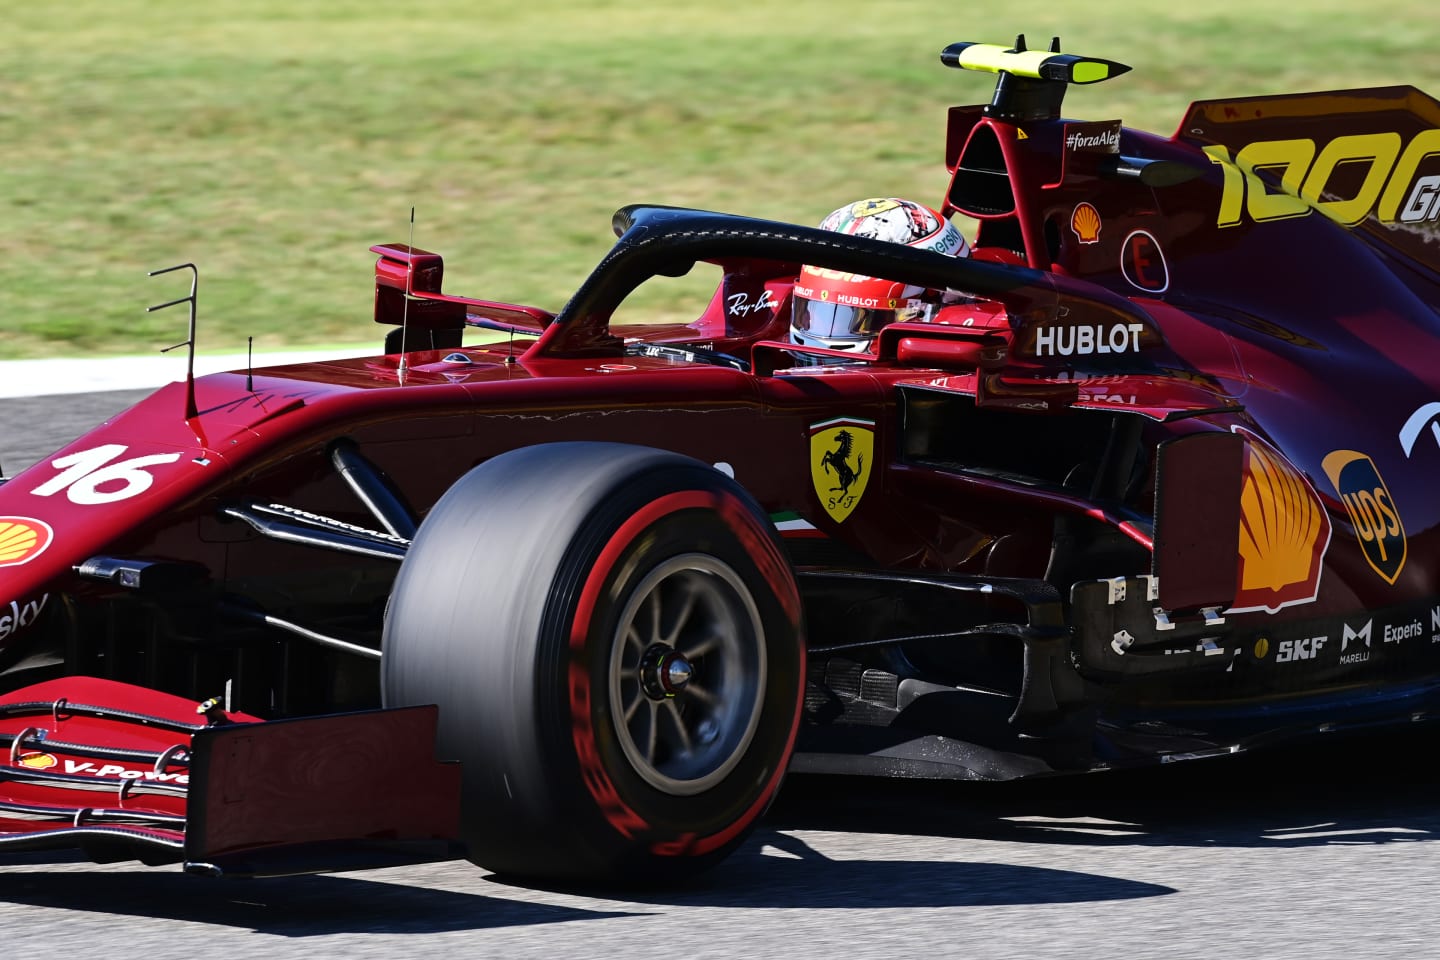 SCARPERIA, ITALY - SEPTEMBER 12: Charles Leclerc of Monaco driving the (16) Scuderia Ferrari SF1000